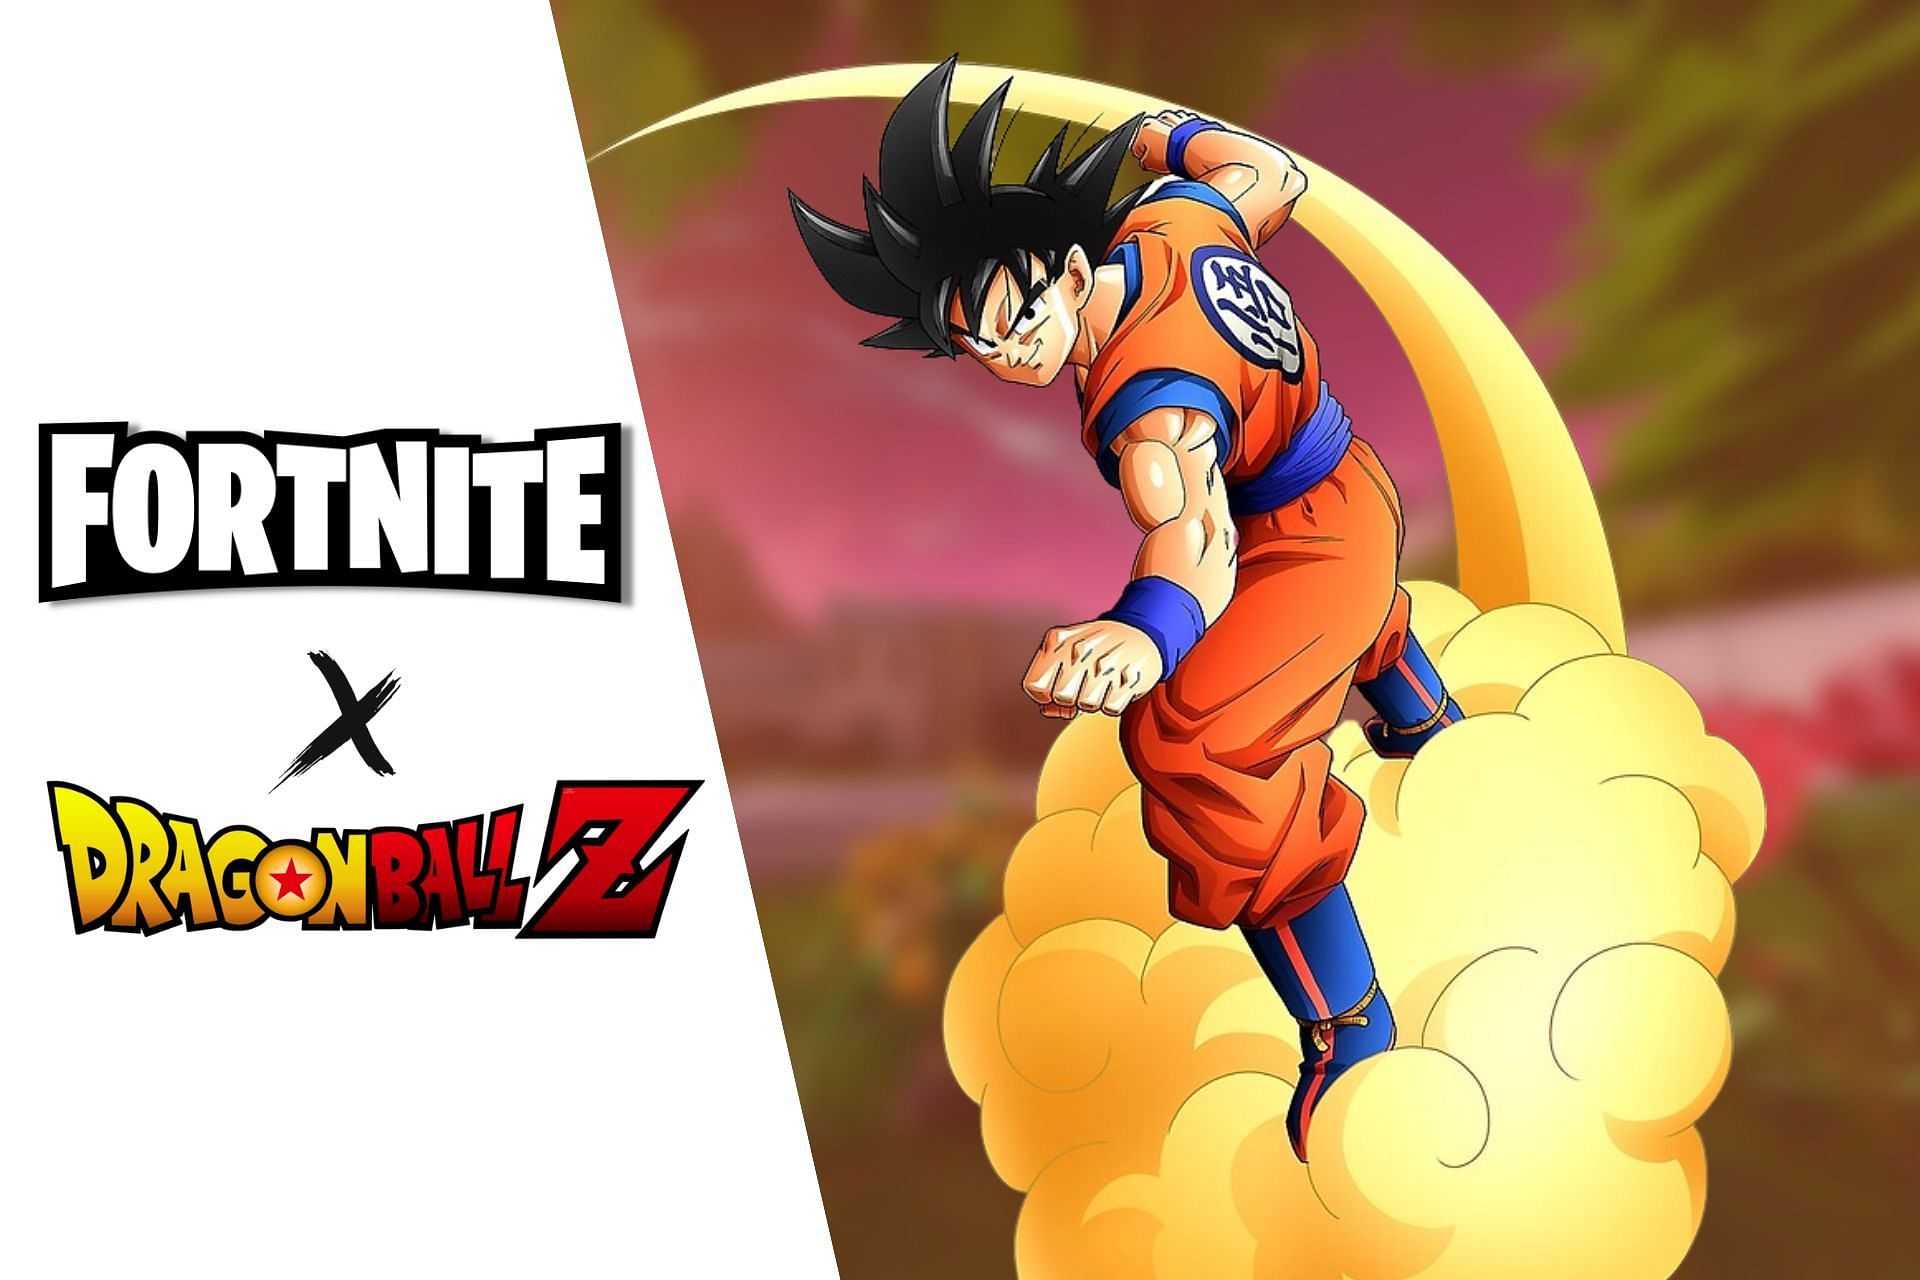 Fortnite x Dragon Ball Z collaboration is arriving soon (Image via Sportskeeda)